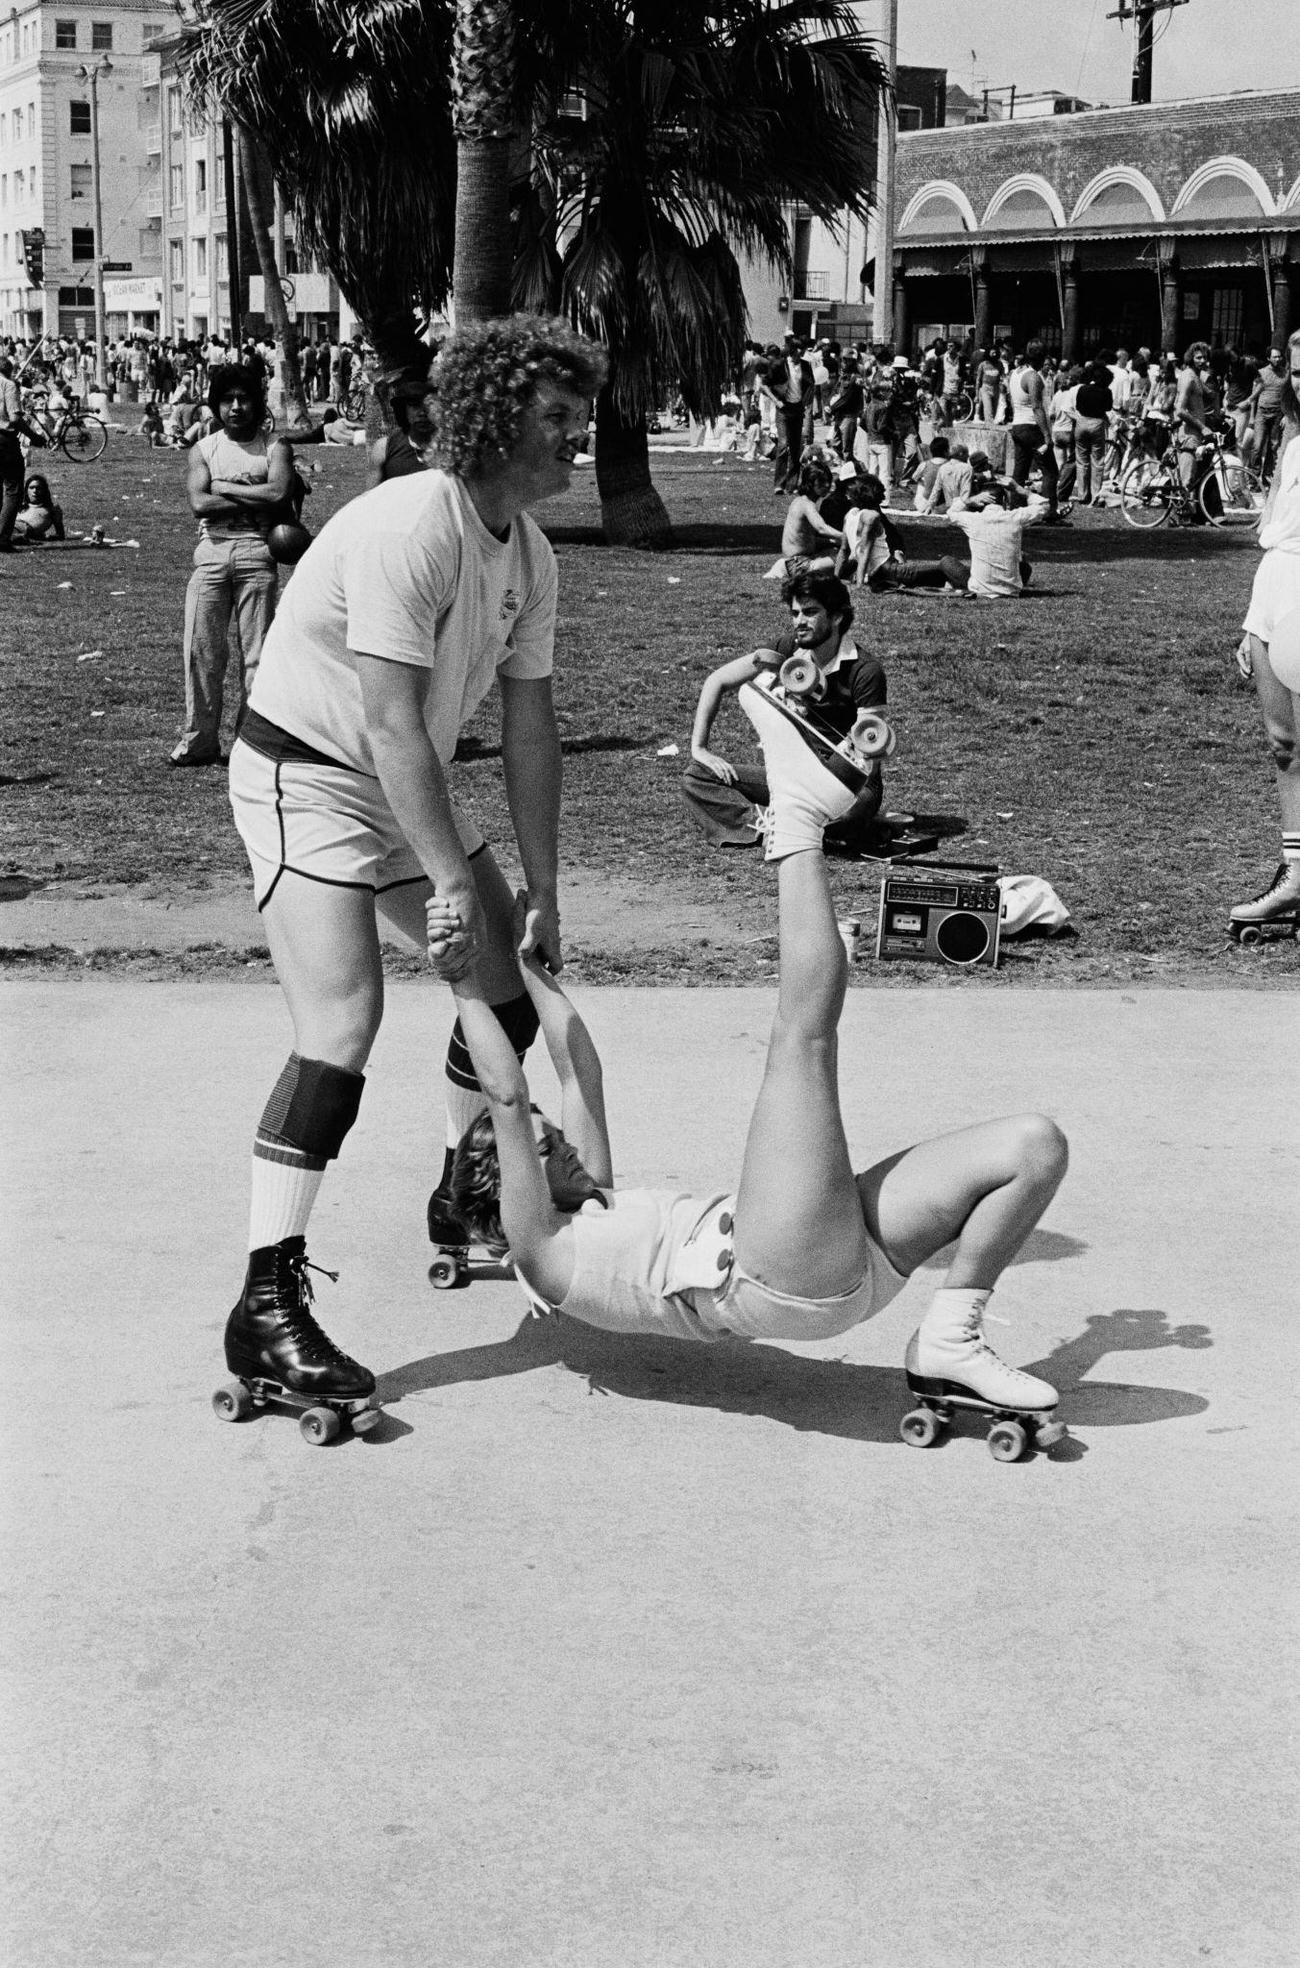 Duo Skates on Venice Beach, Los Angeles, 1980